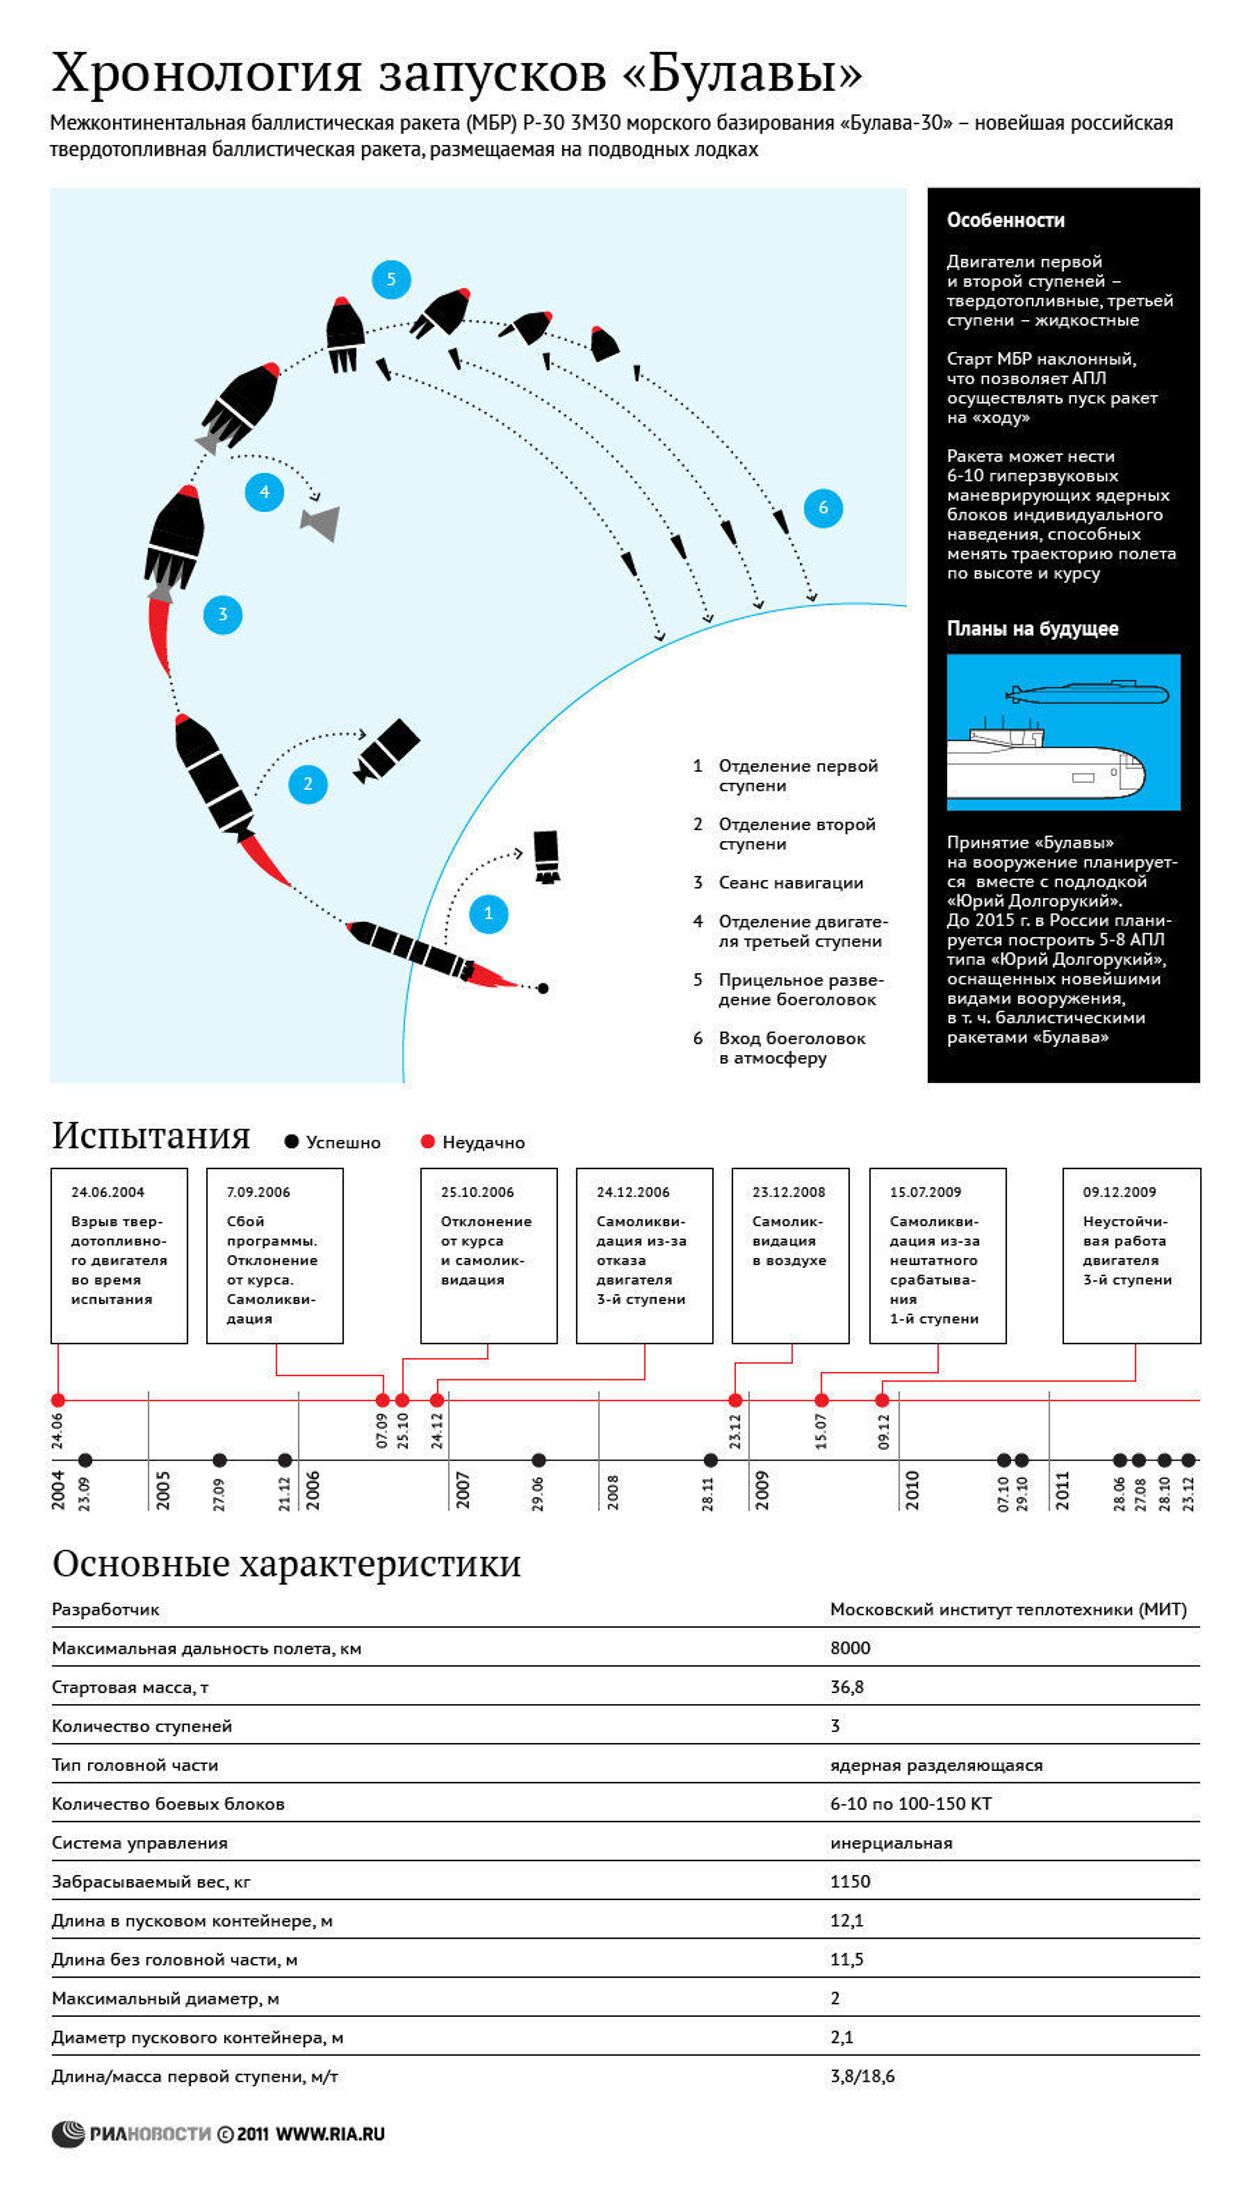 Хронология запусков морских баллистических ракет «Булава»